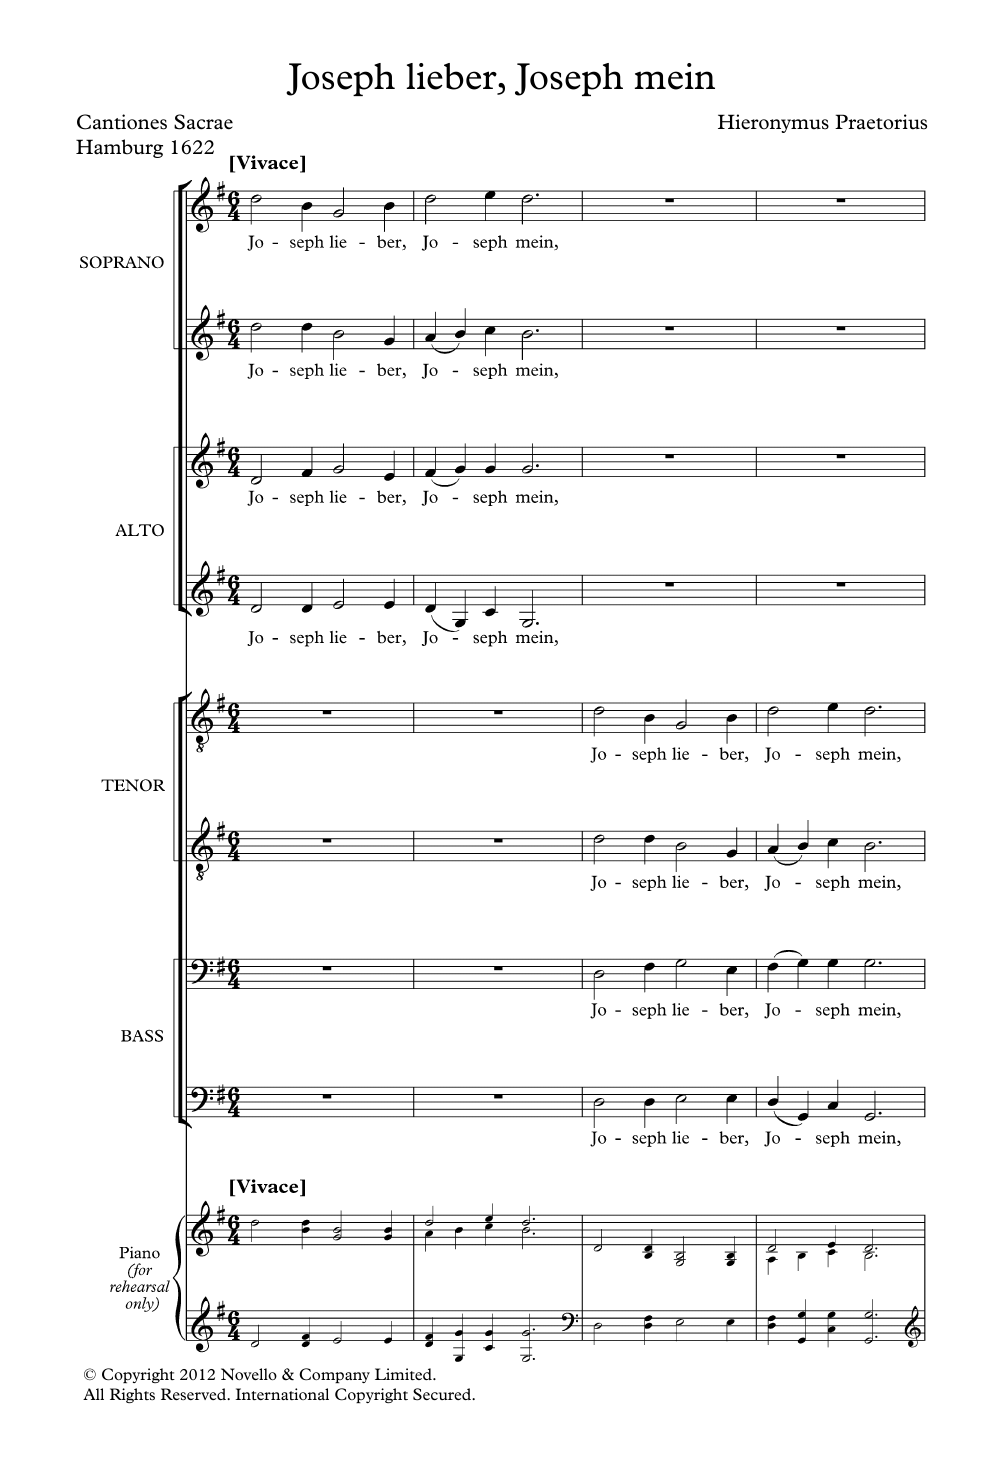 Download Hieronymus Praetorius Joseph, Lieber Joseph Mein Sheet Music